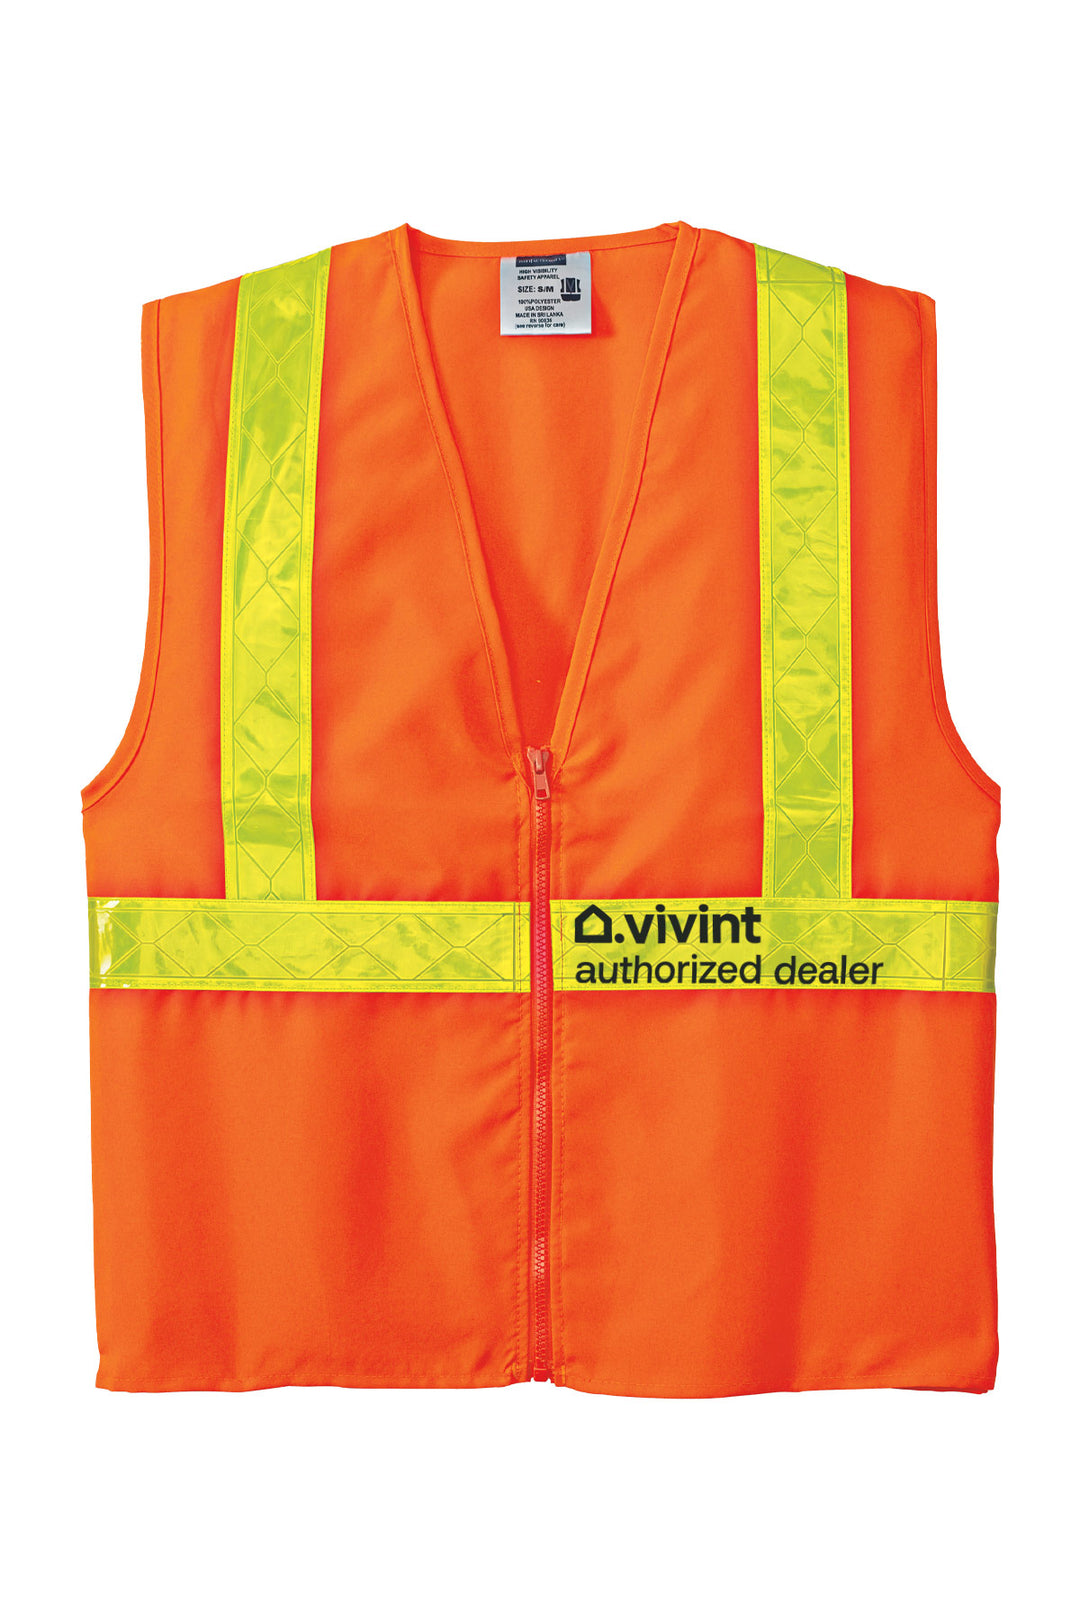 Enhanced Visibility Vest